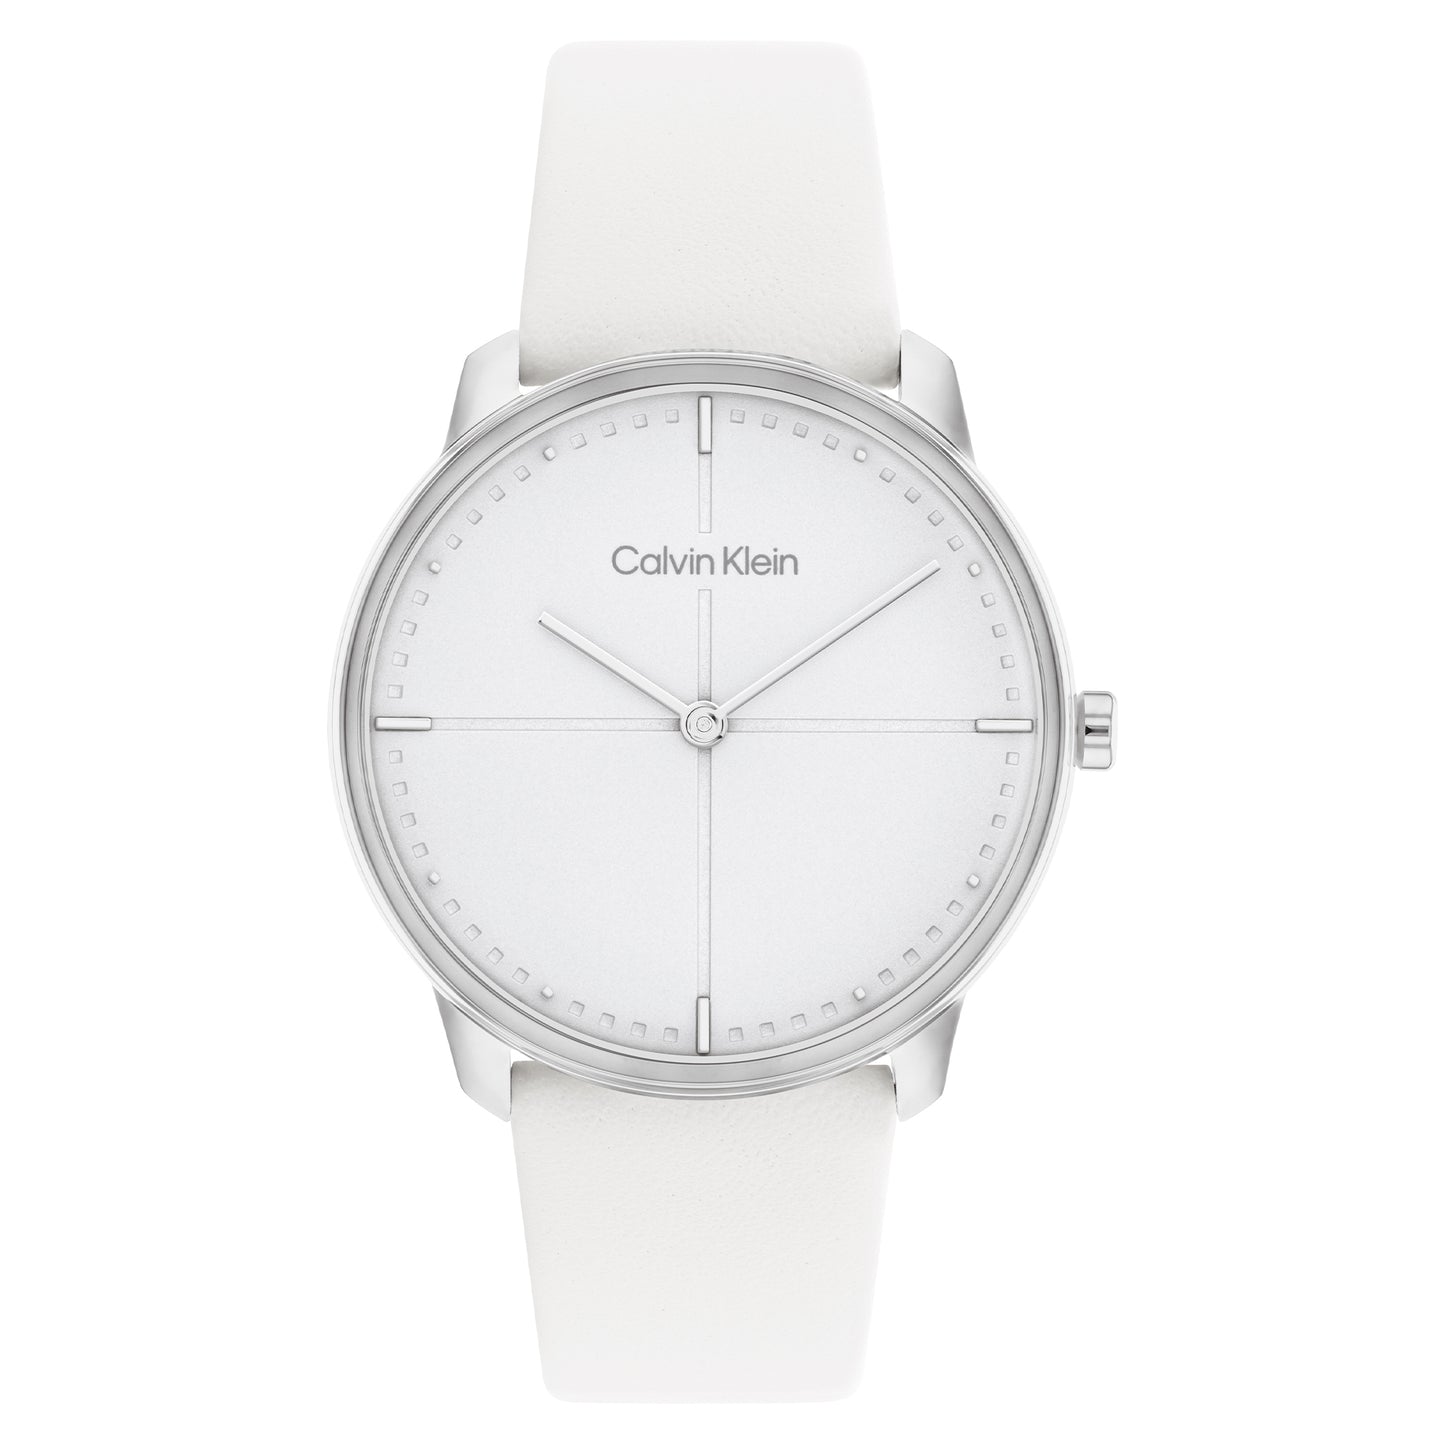 Calvin Klein Expressive White Leather Strap Analog Watch CK-25200161